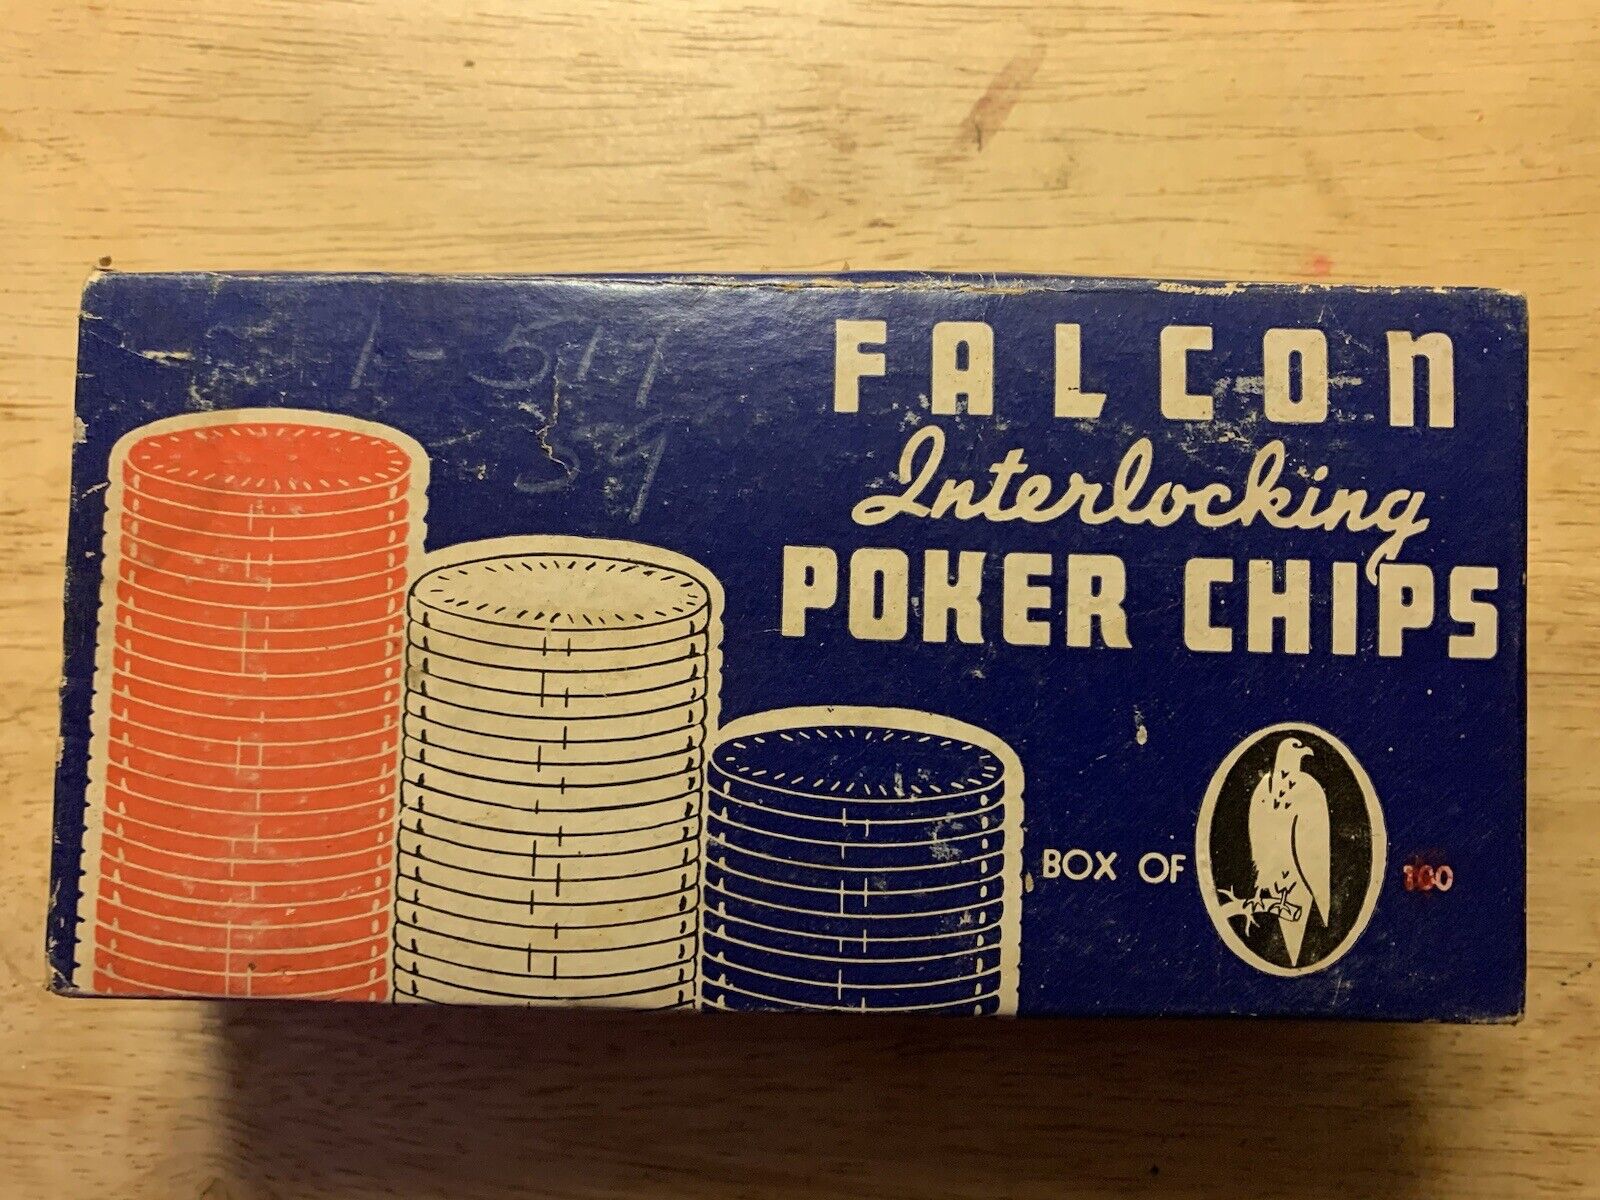 Falcon Antique Vintage Clay Interlocking Poker Chips